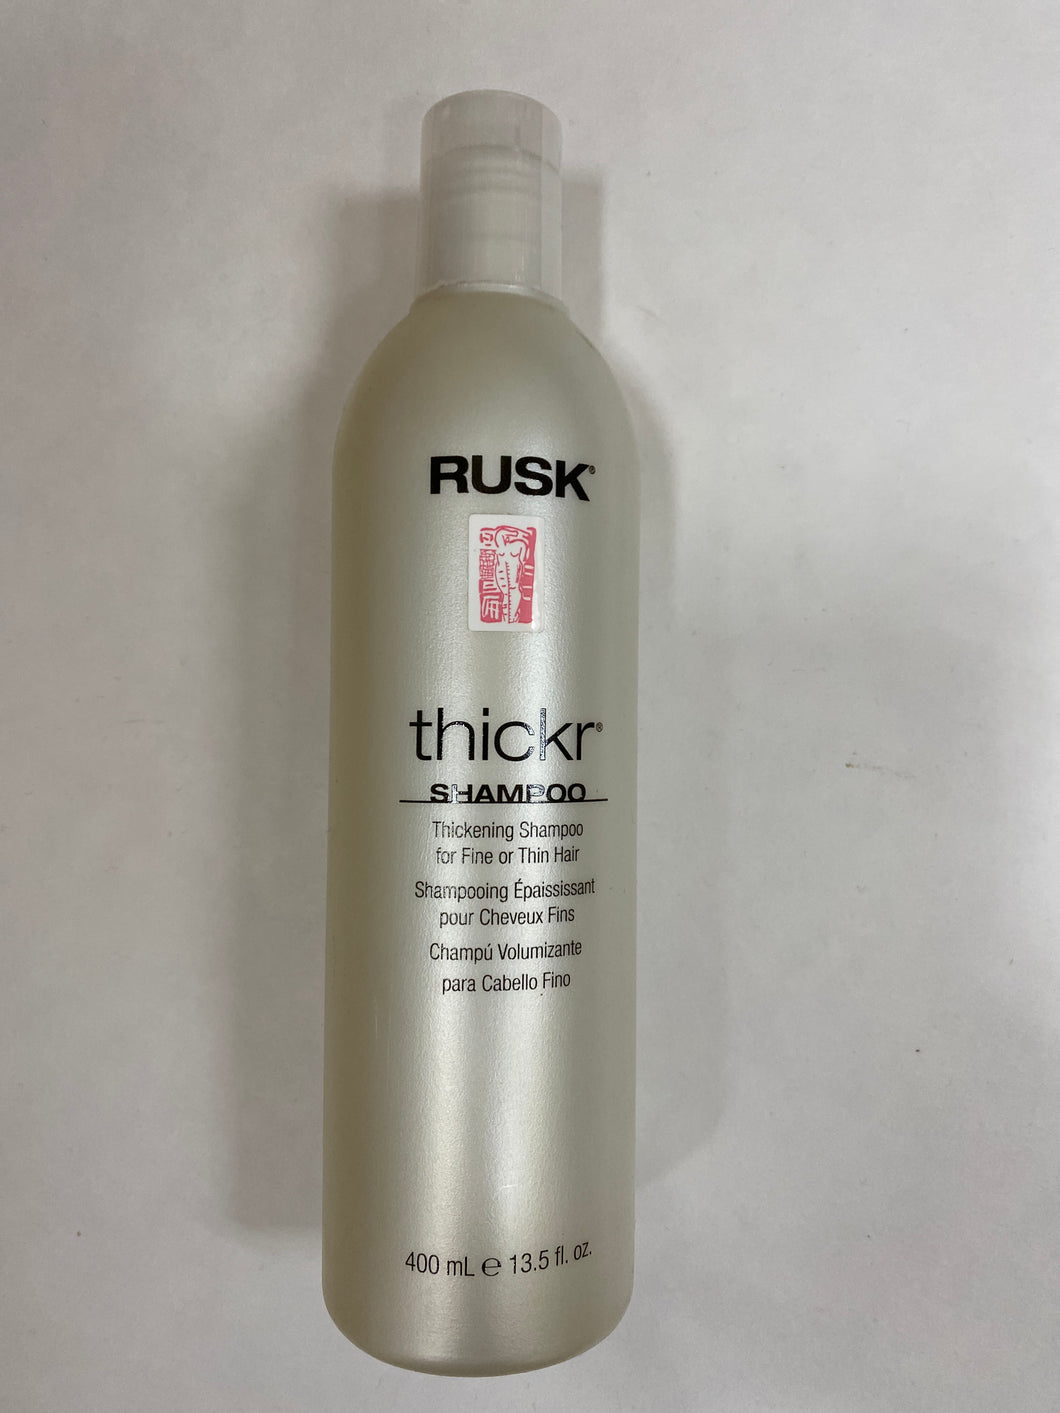 Rusk Thickr Shampoo Thickening Shampoo